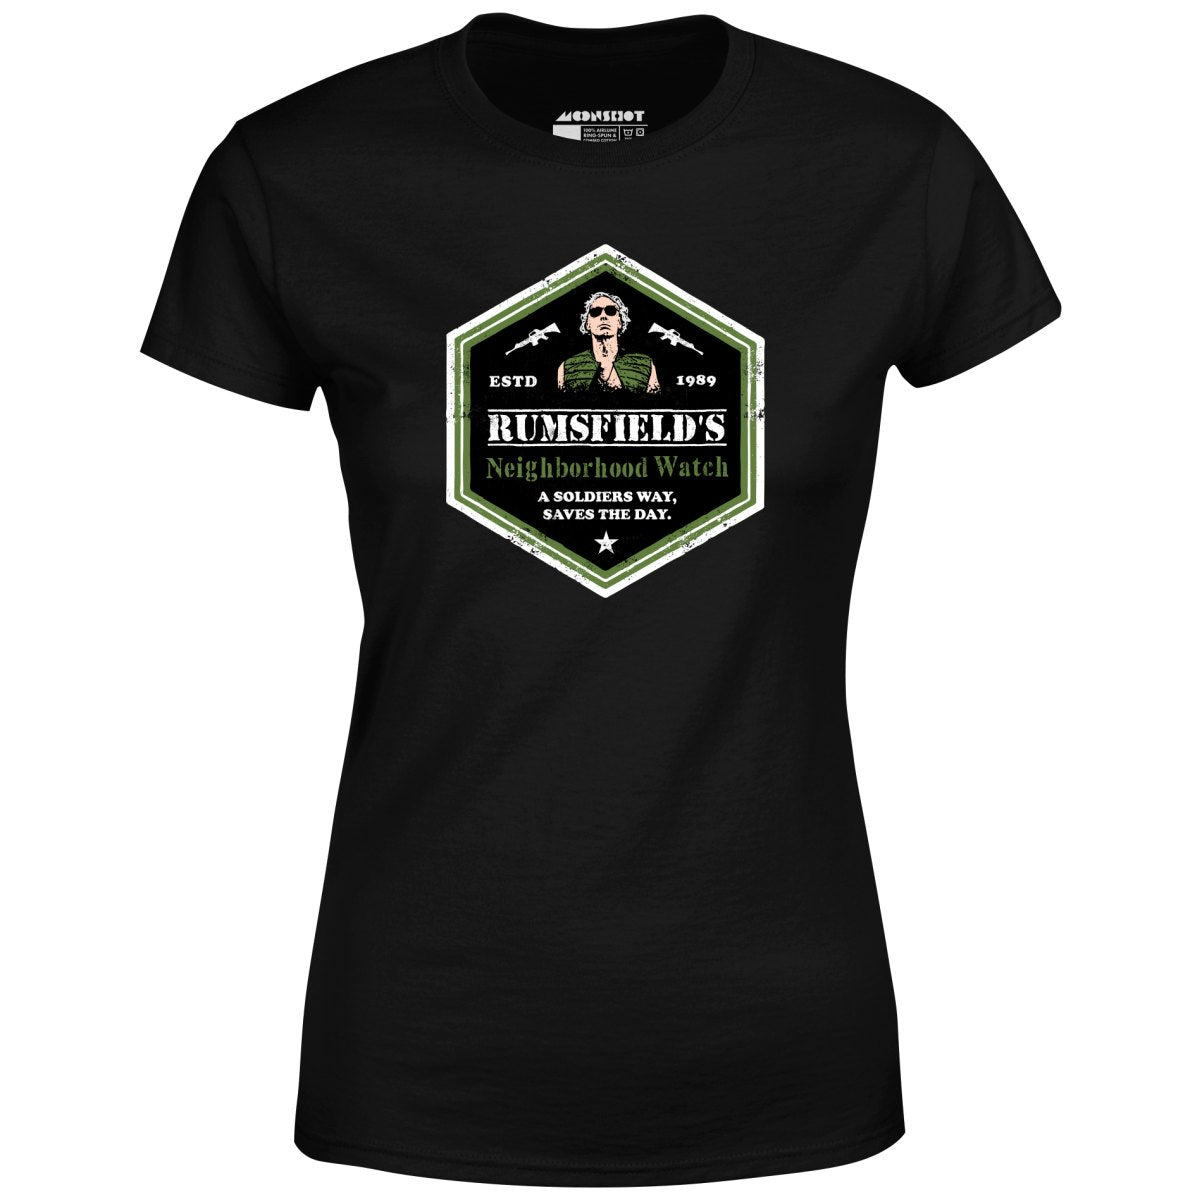 Rumsfield's Neighborhood Watch - Women's T-Shirt